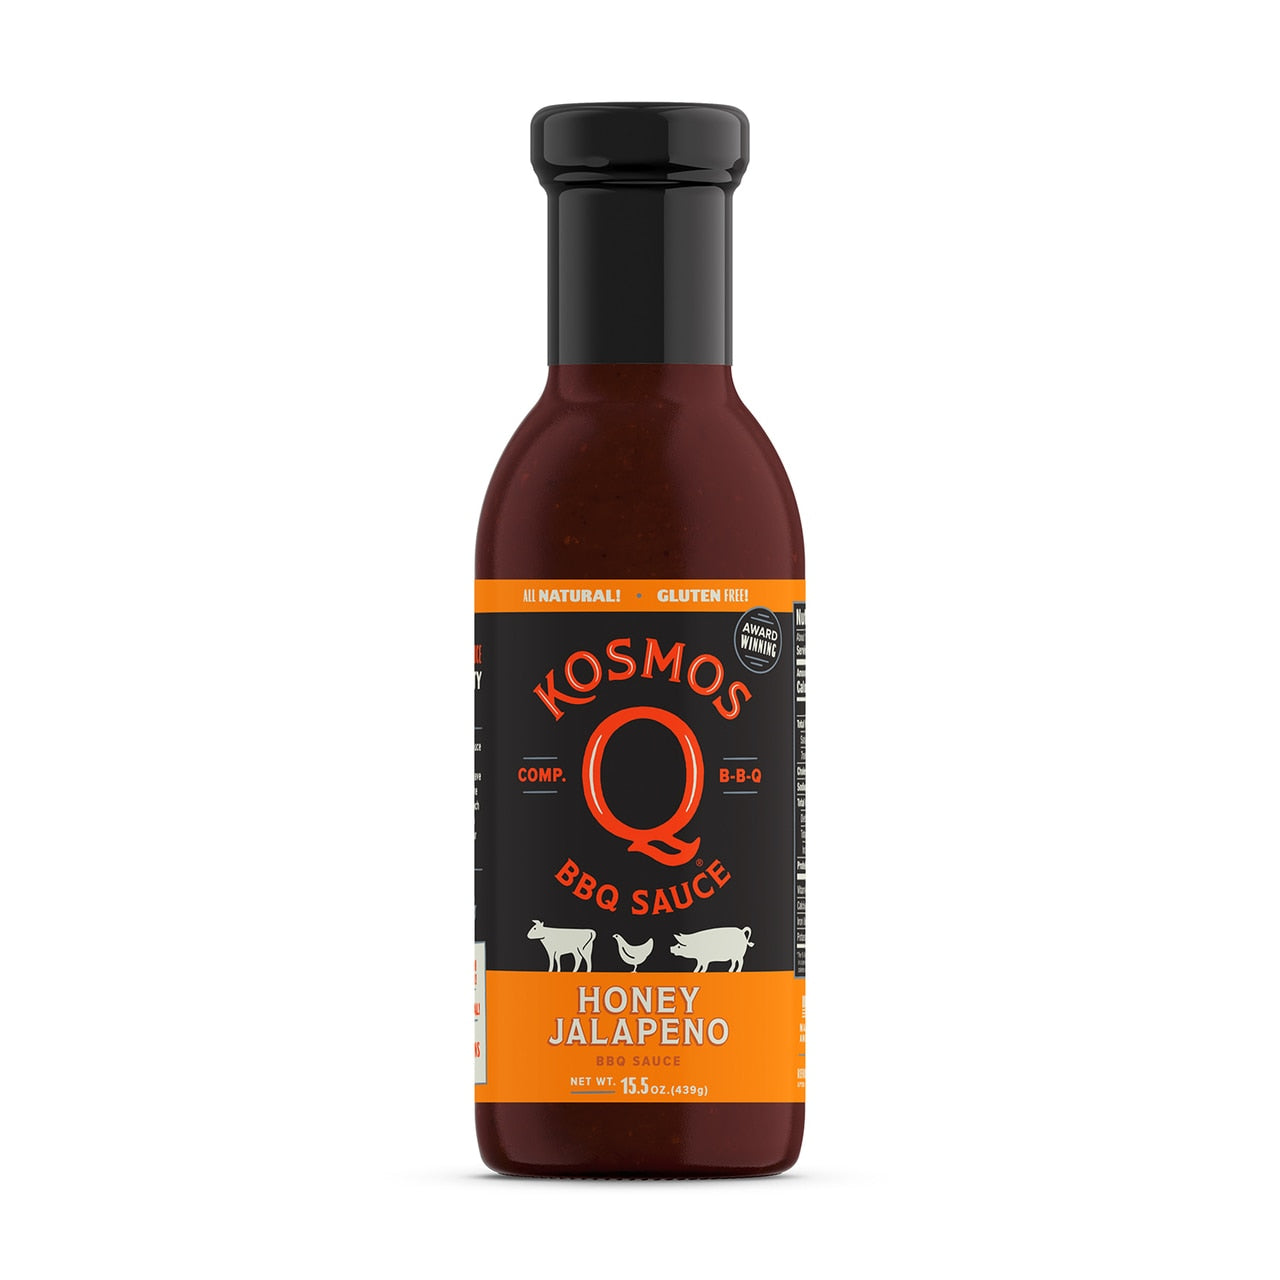 Kosmo's Q - Honey Jalapeno BBQ Sauce